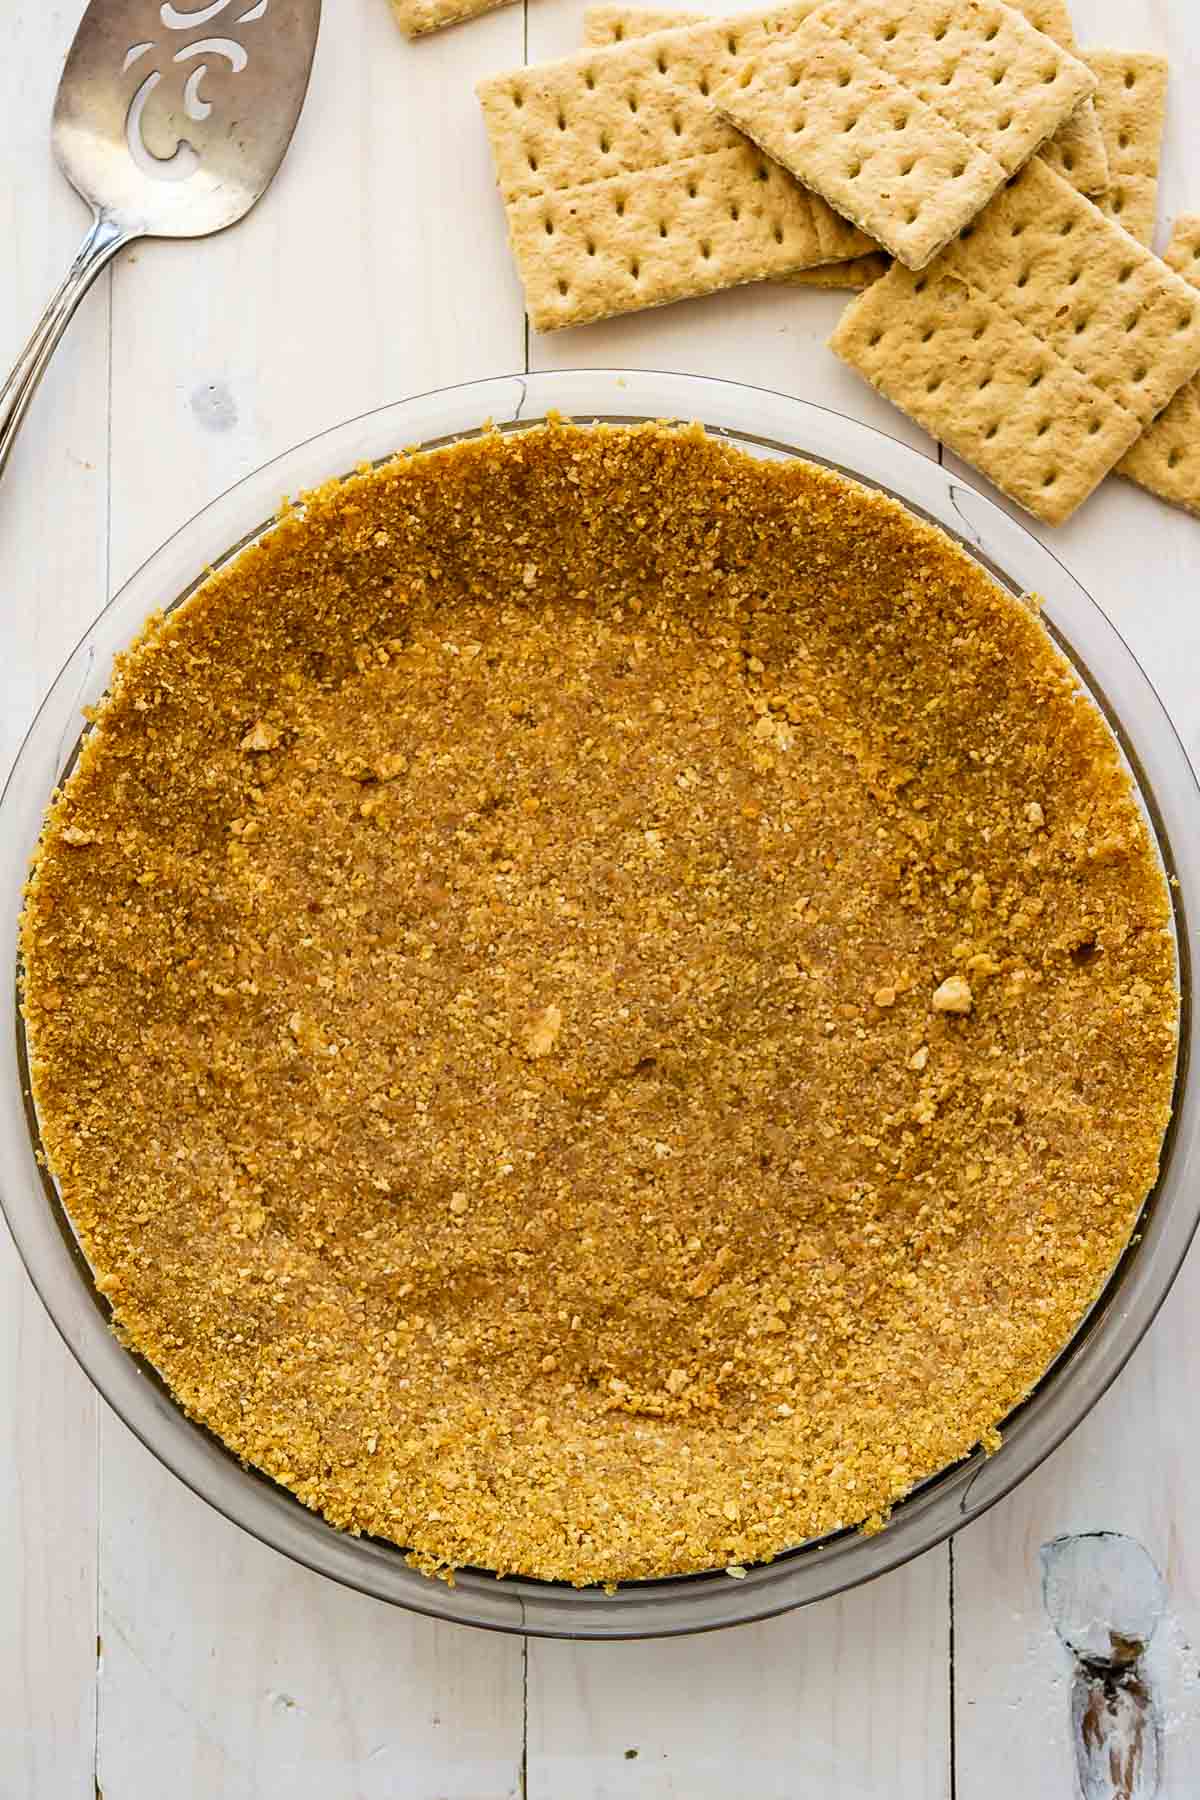 graham cracker crust in glass pie plate.